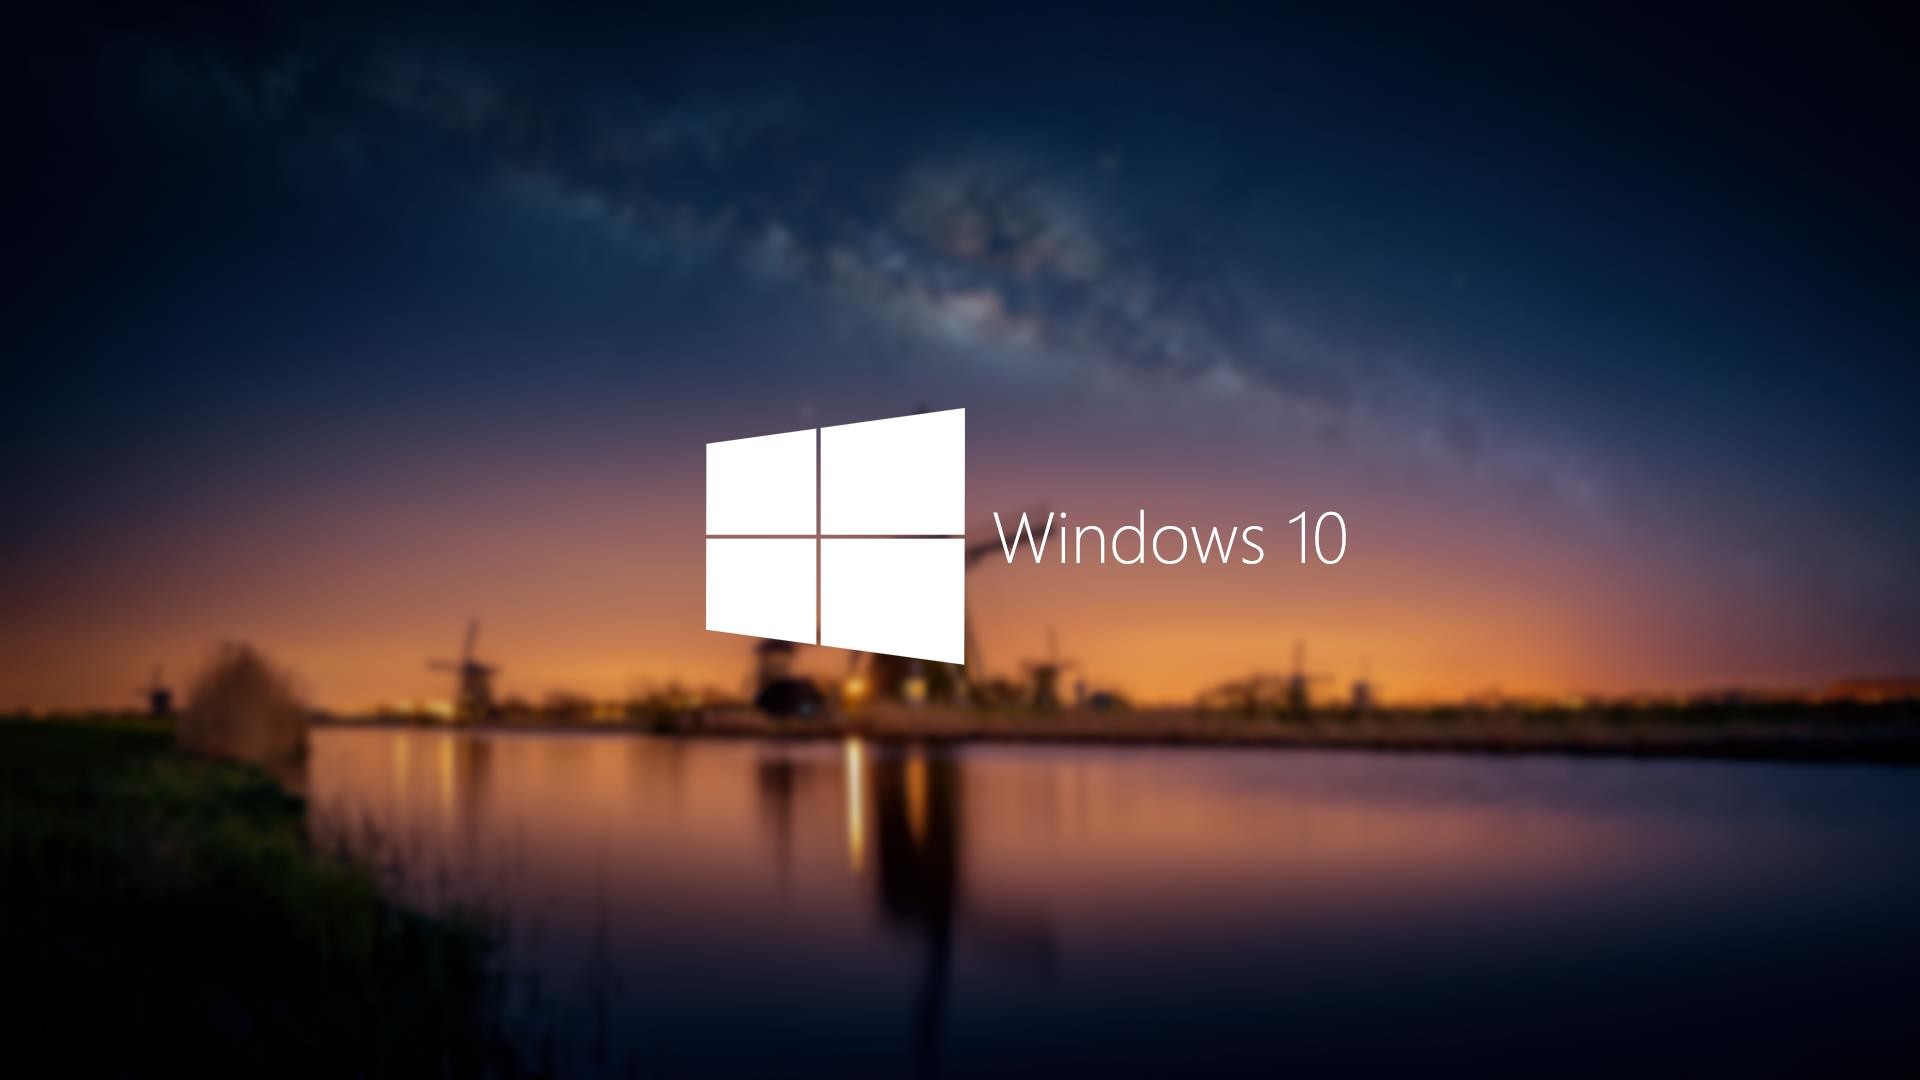 Stunning Windows 10 Wallpapers